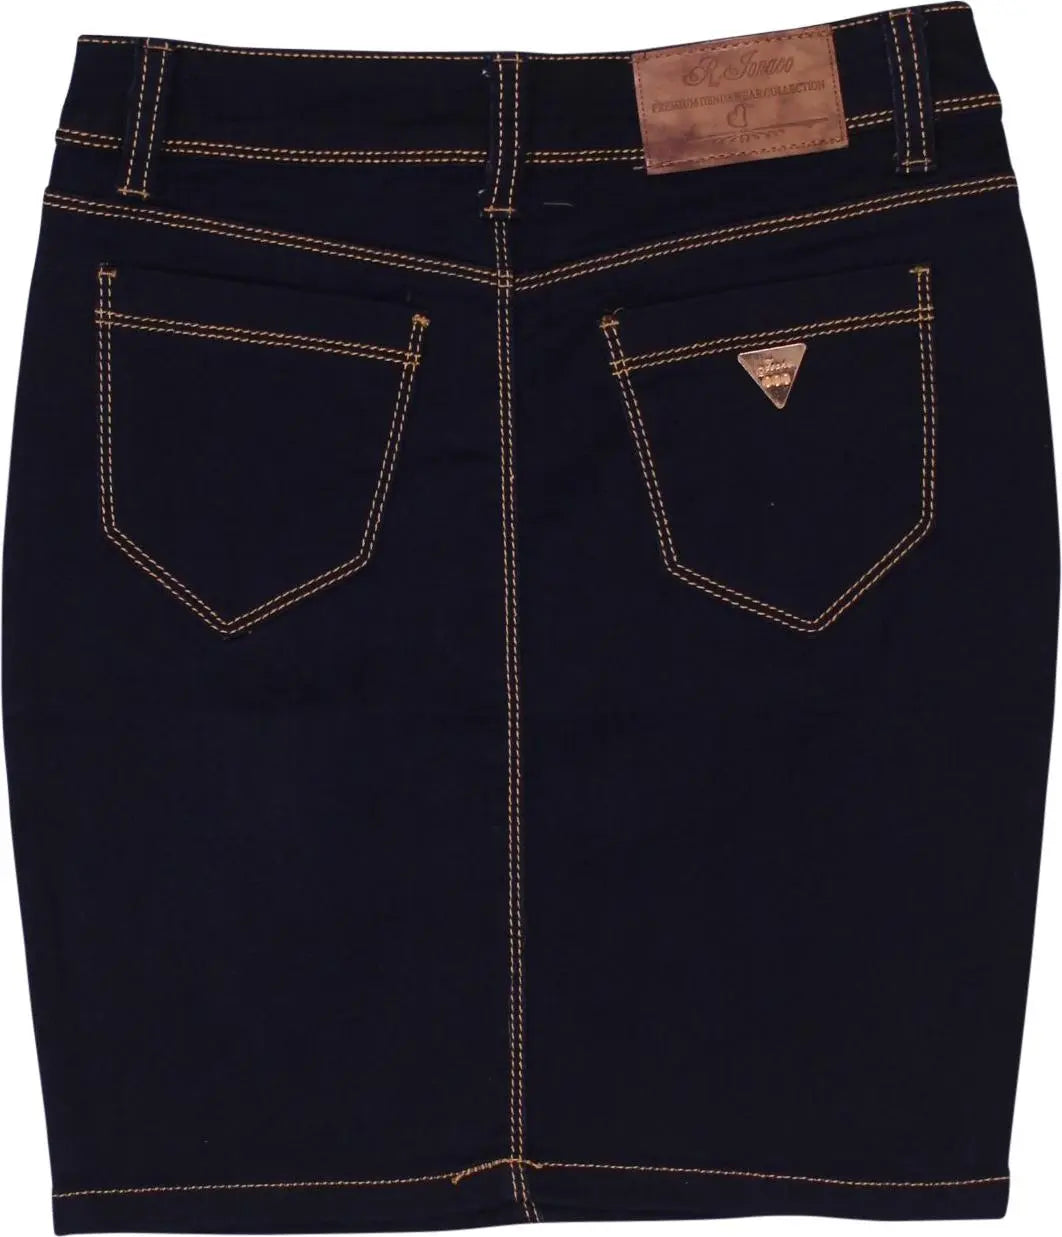 R Jonaco - Short Denim Skirt- ThriftTale.com - Vintage and second handclothing